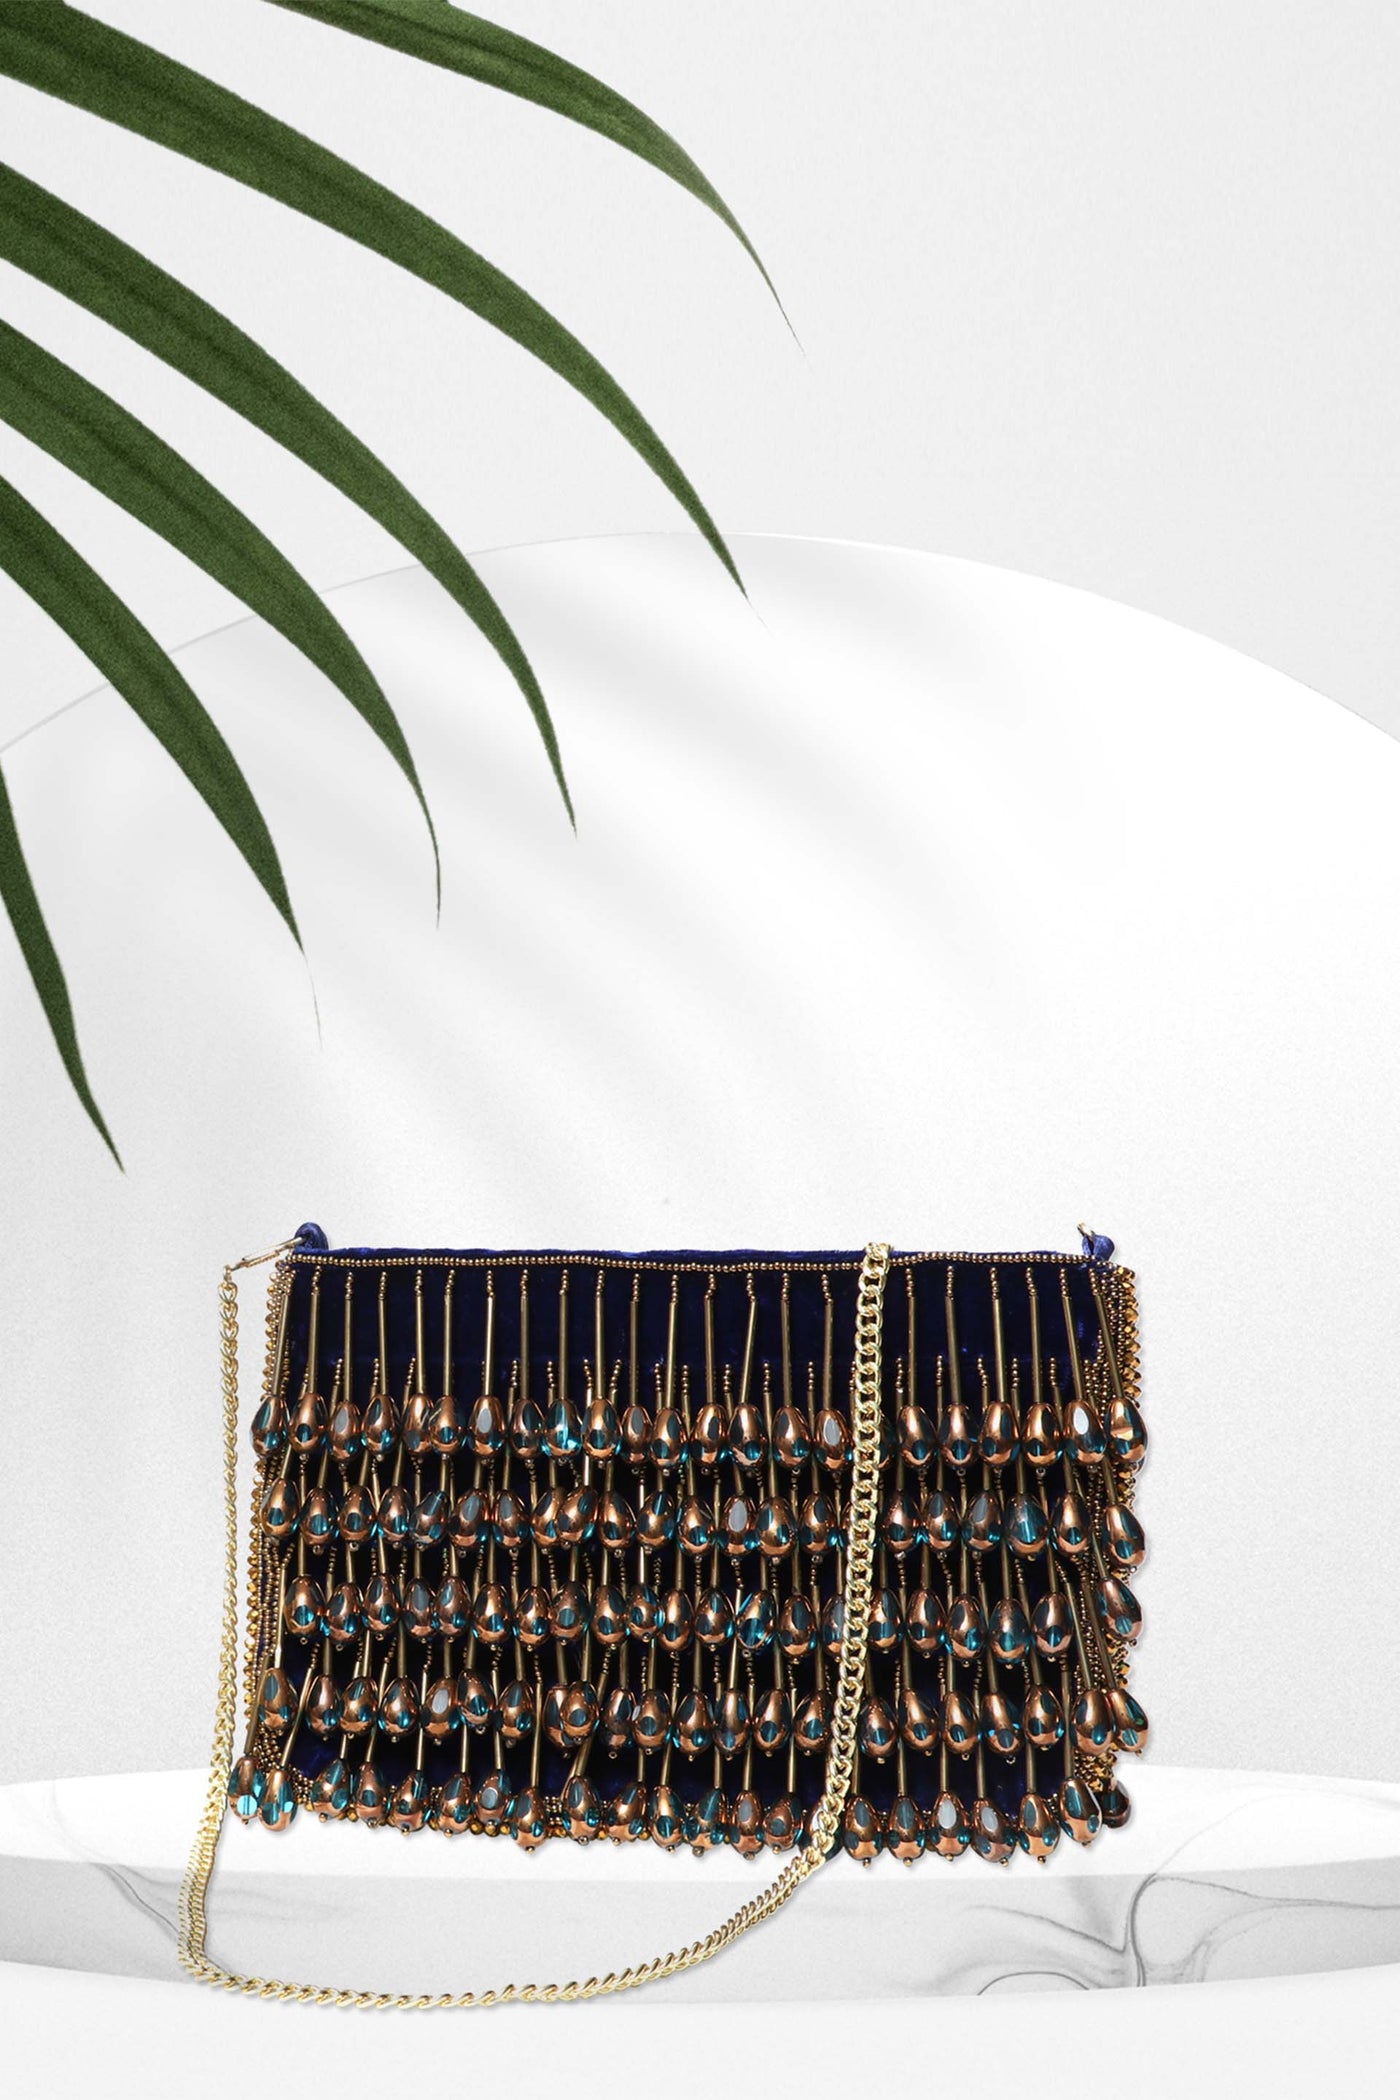 bijoux by priya chandna "Bead" Drop Clutch in Copper Blue fashion accessories online shopping melange singapore indian designer wear